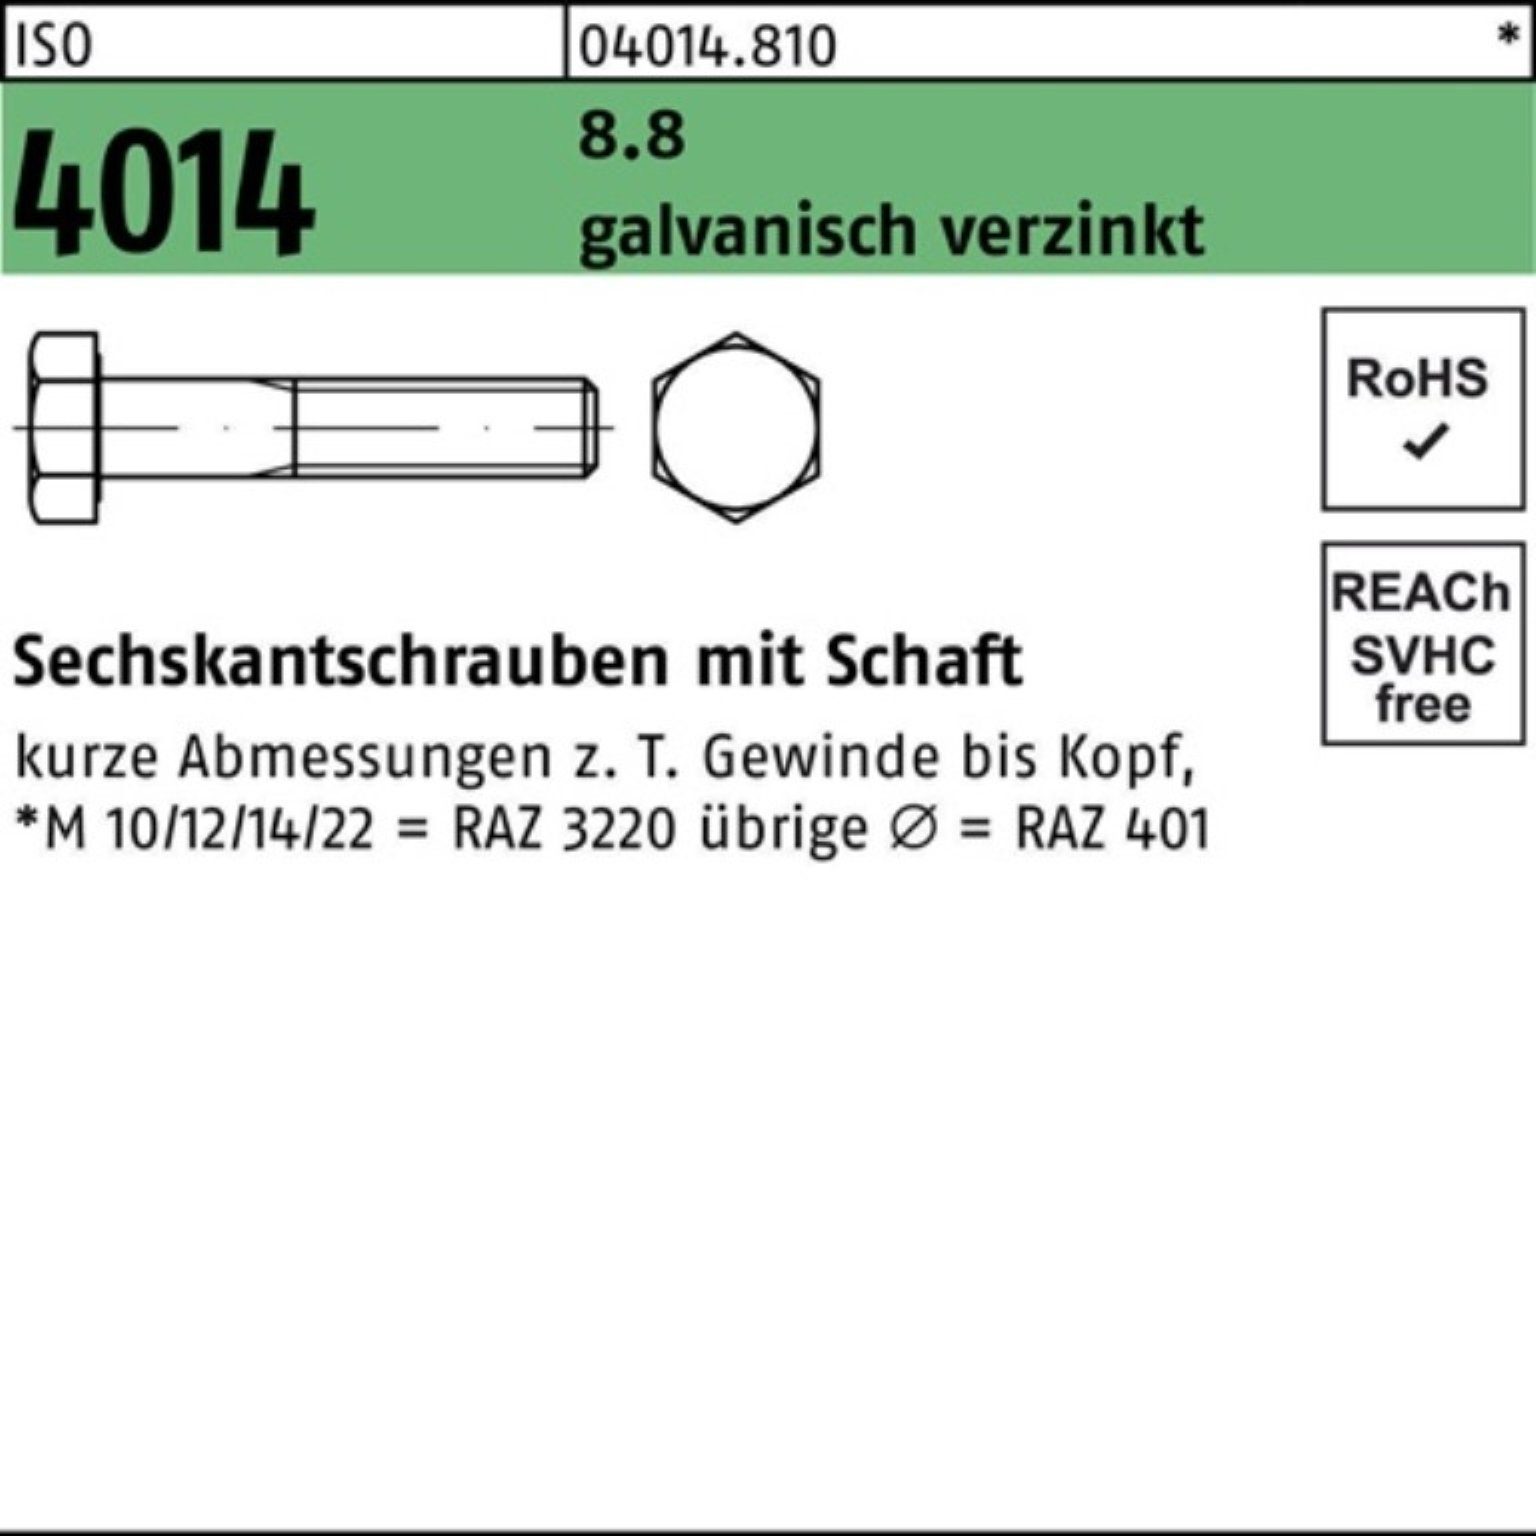 Bufab Sechskantschraube 100er Pack Sechskantschraube ISO 4014 Schaft M36x 220 8.8 galv.verz. 1 | Schrauben